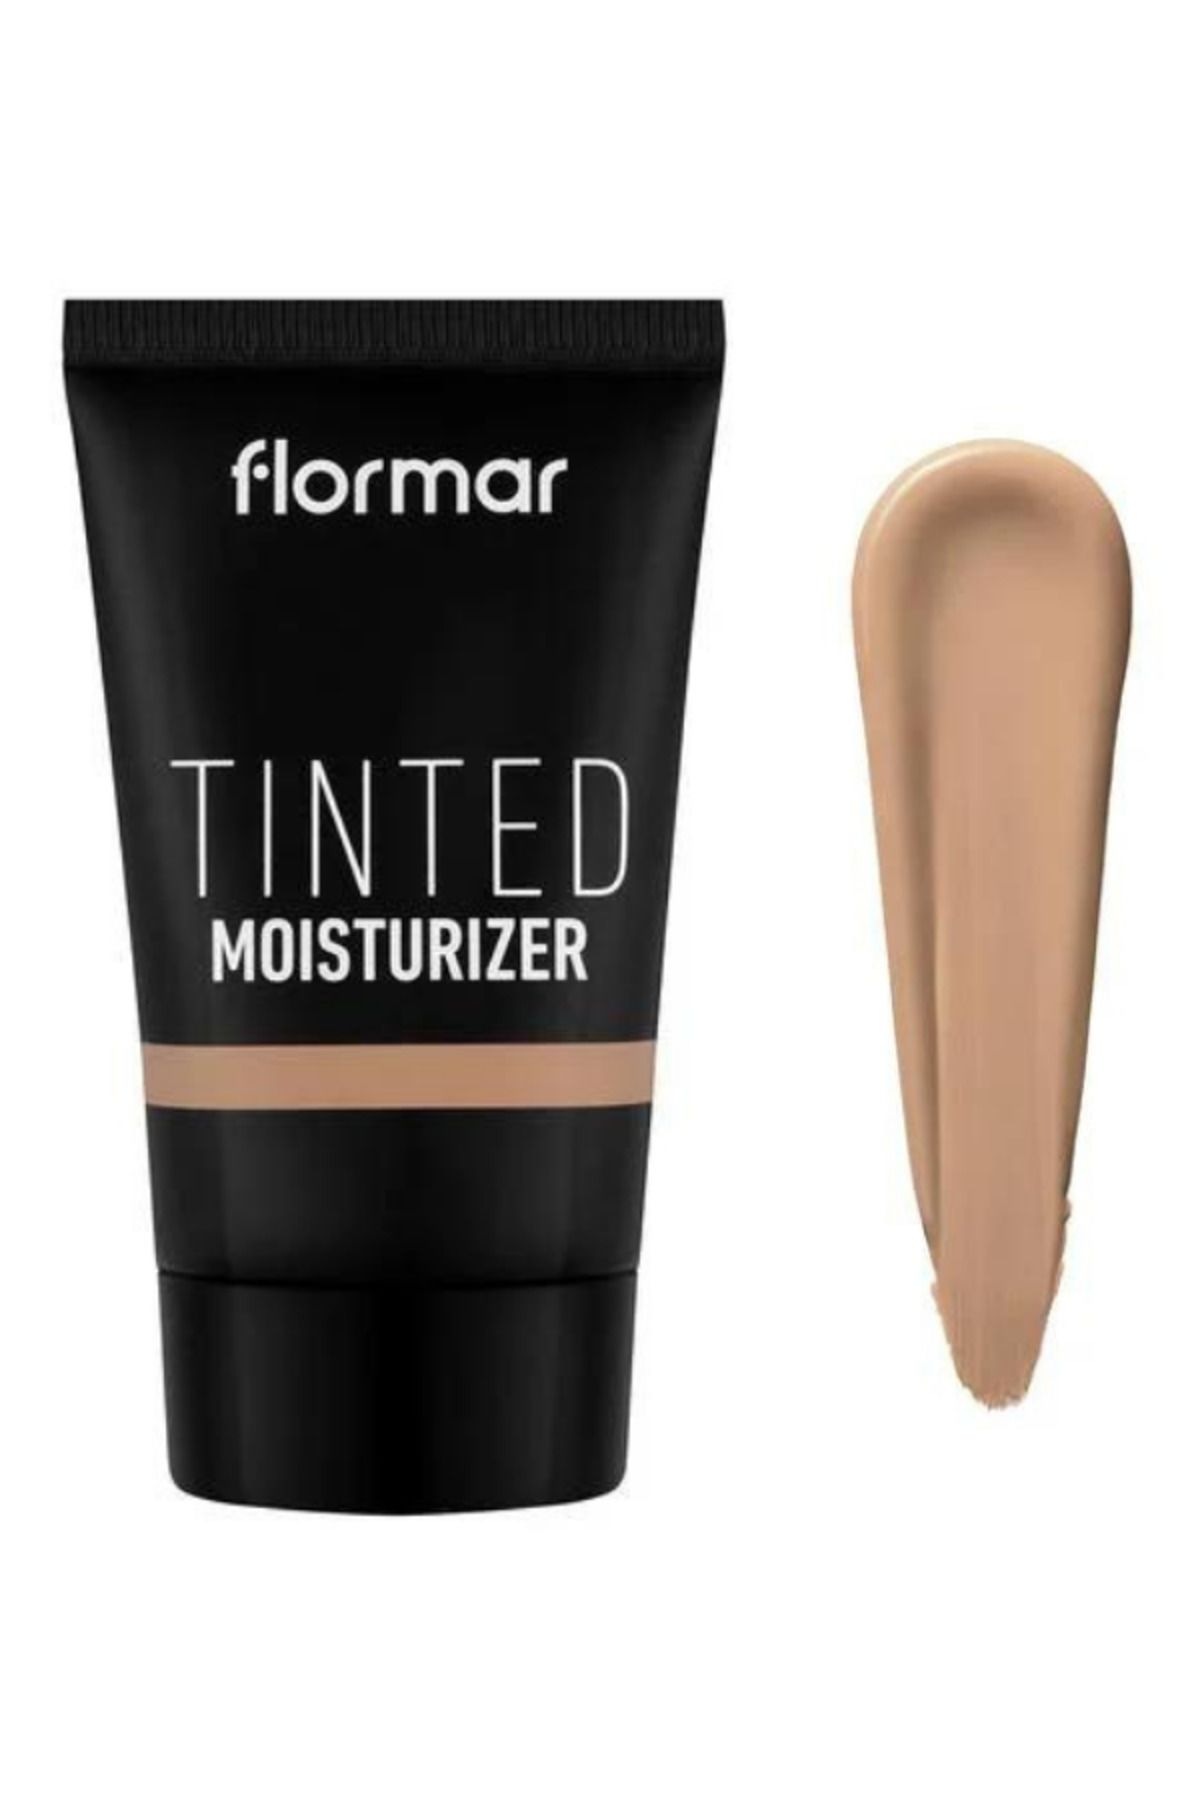 Flormar مرطوب کننده رنگی که تناسب رنگ پوست را بهبود می بخشد و چهره را روشن و درخشان می کند